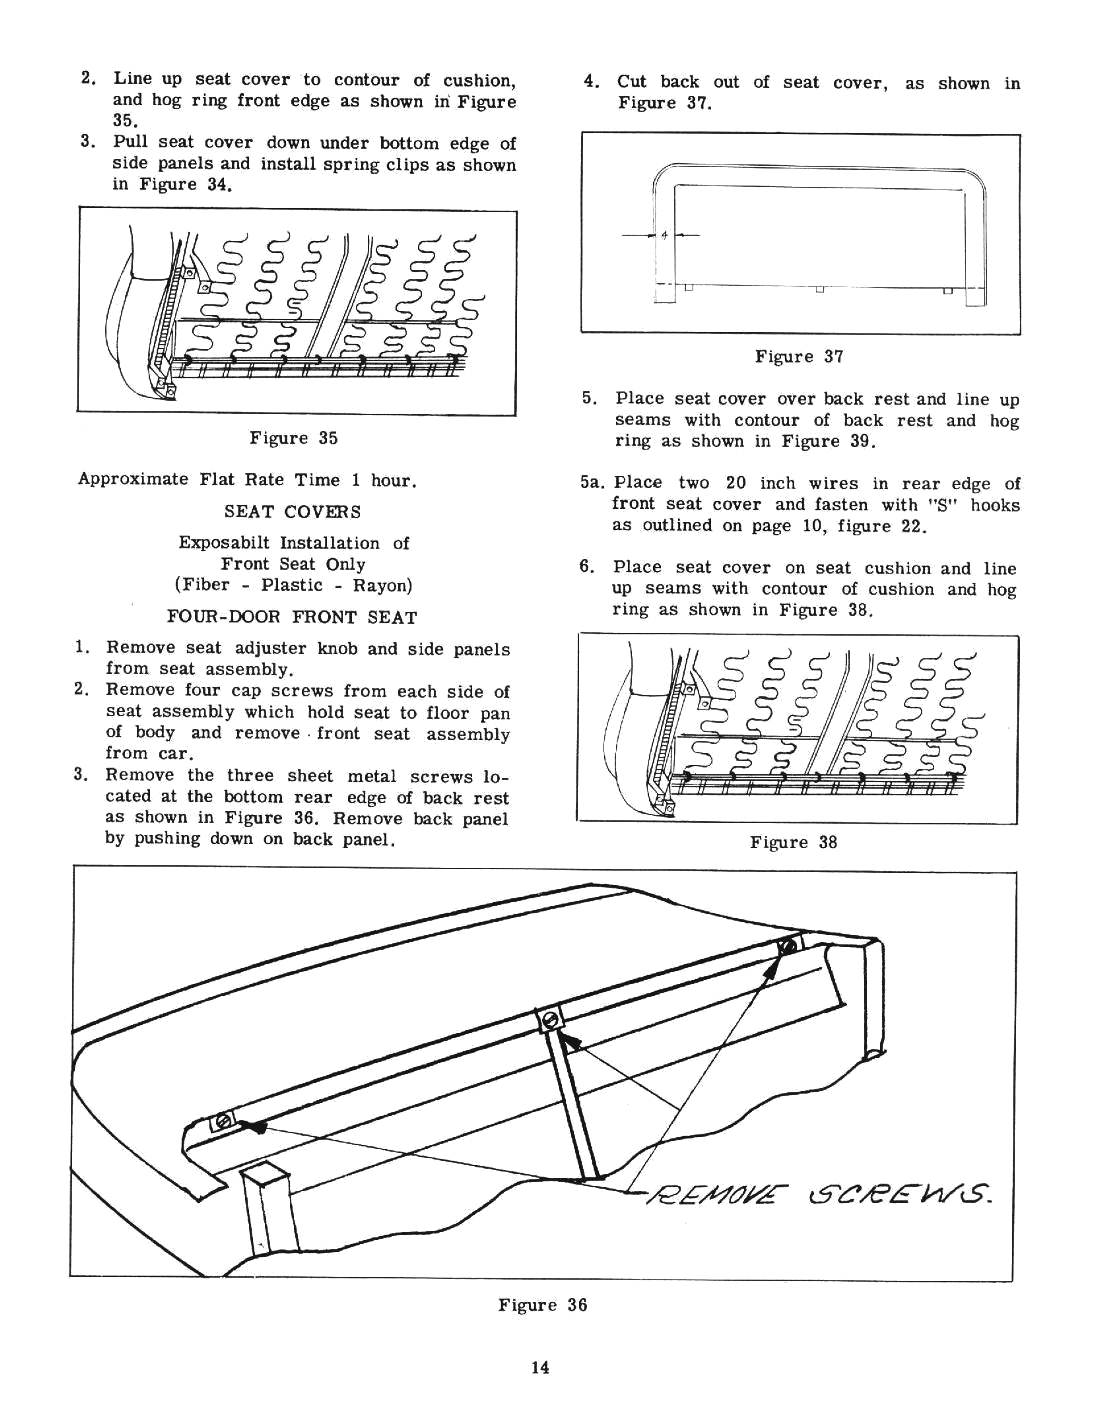 1951_Chevrolet_Acc_Manual-14